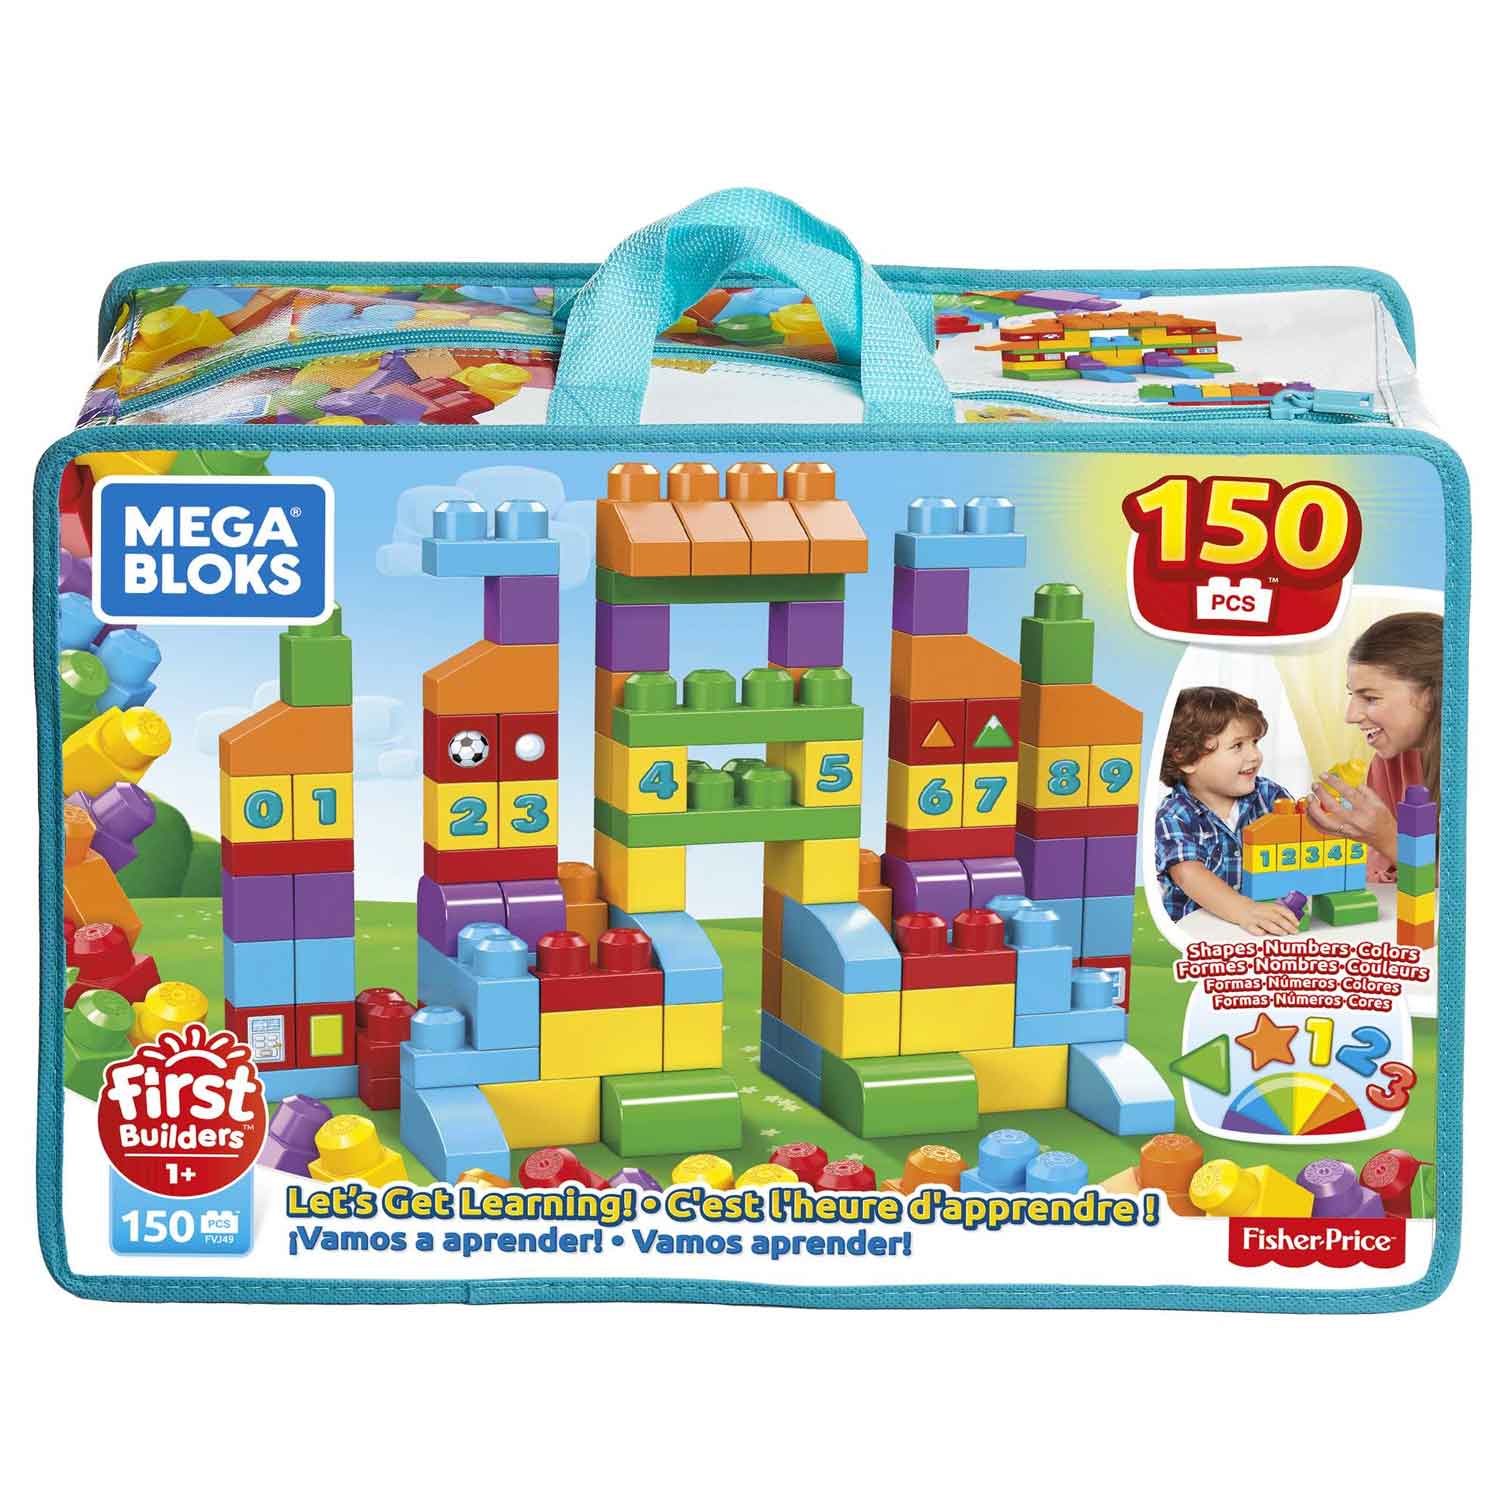 First Builders Mega Bloks, 150 Pieces Becker's